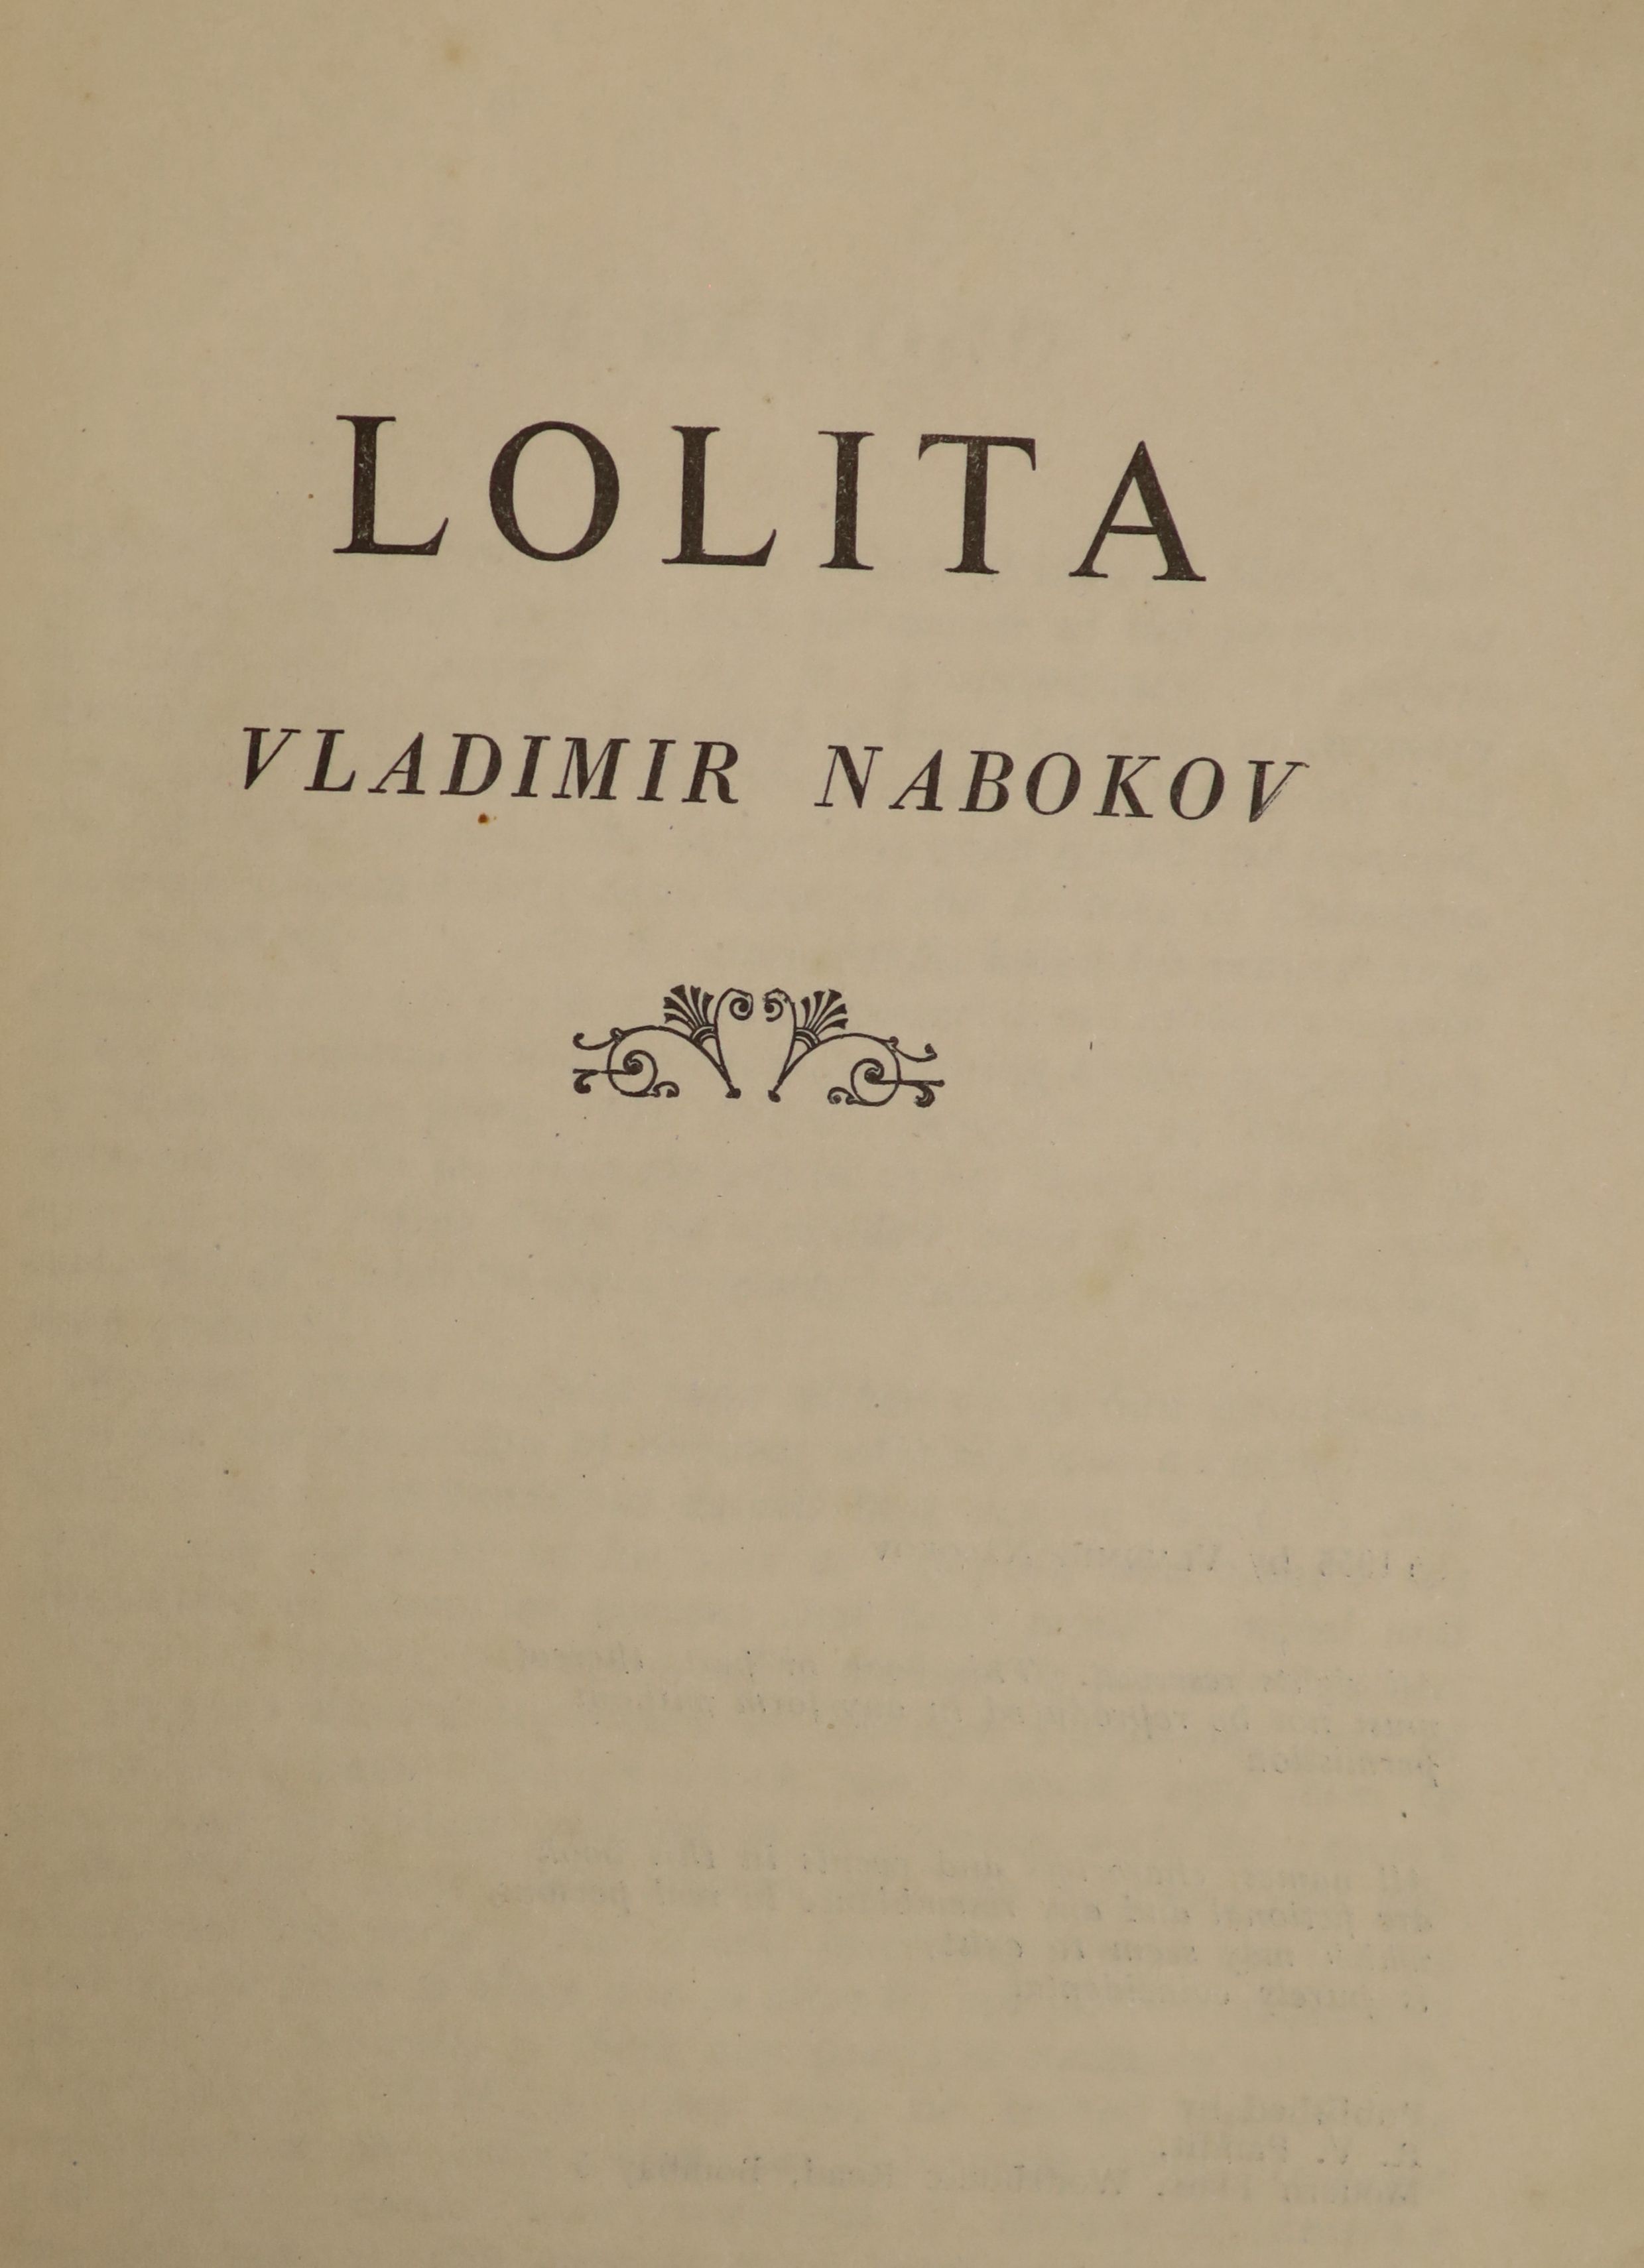 Nabokov, Vladimir - Lolita, 1st Indian edition, 8vo, cloth, R. V. Pandit, Bombay, 1955